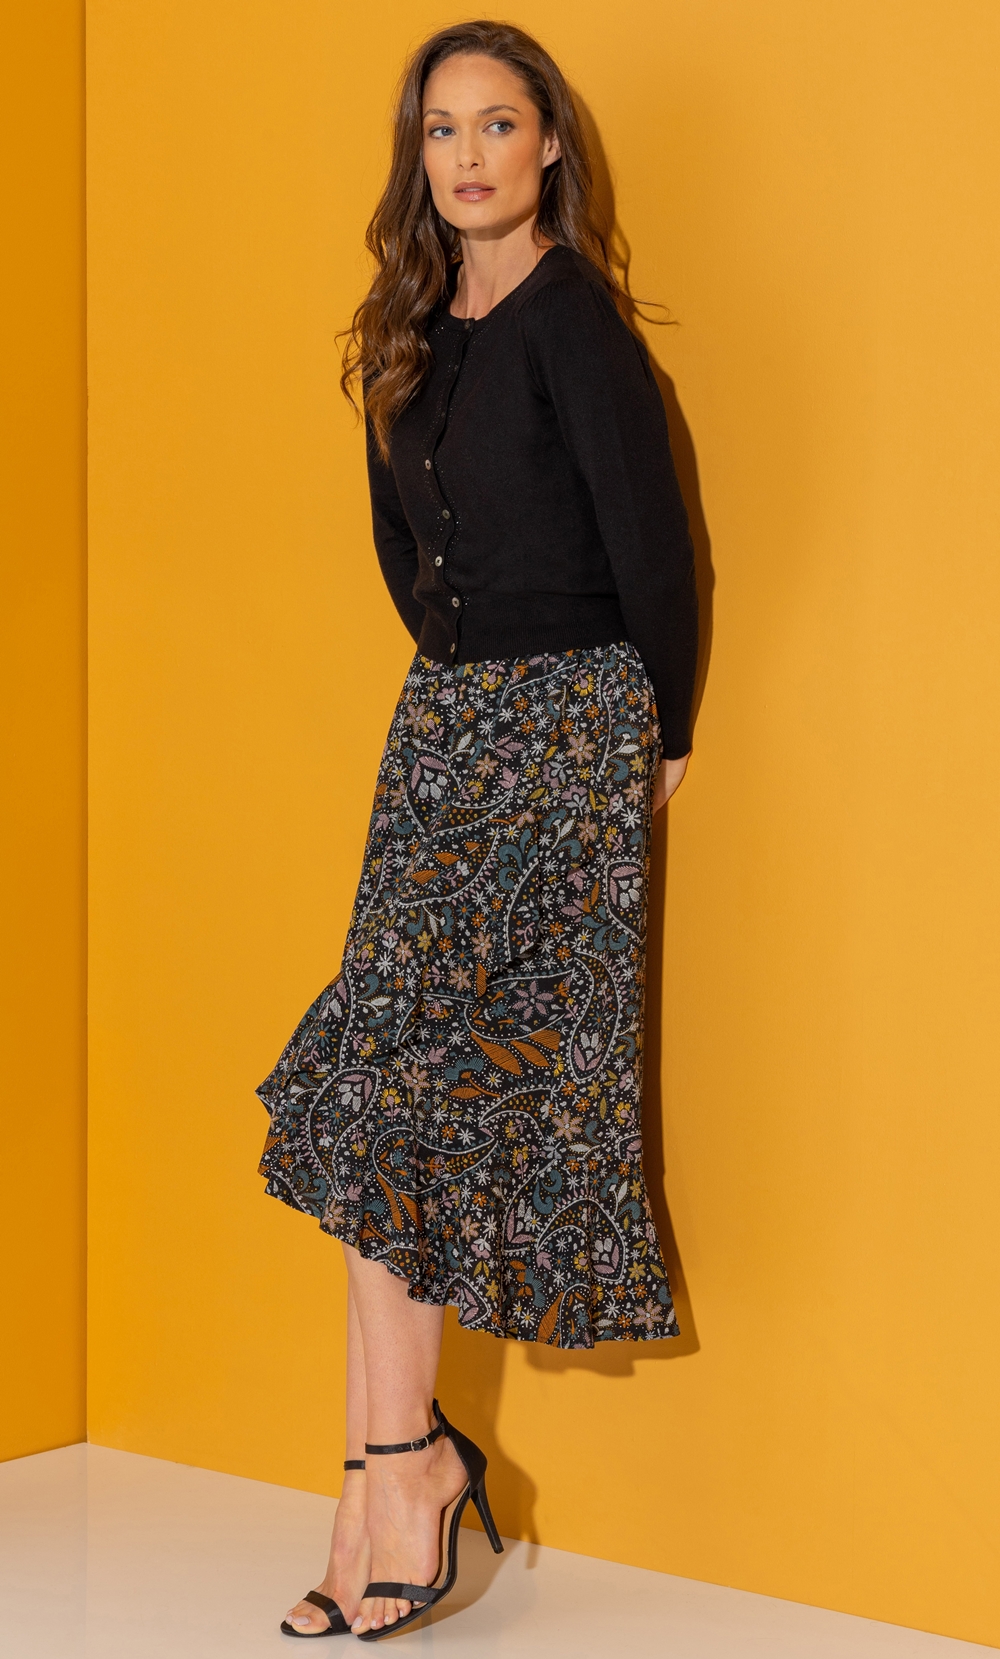 Brands - Klass Paisley Print Textured Midi Skirt Black/Multi Women’s